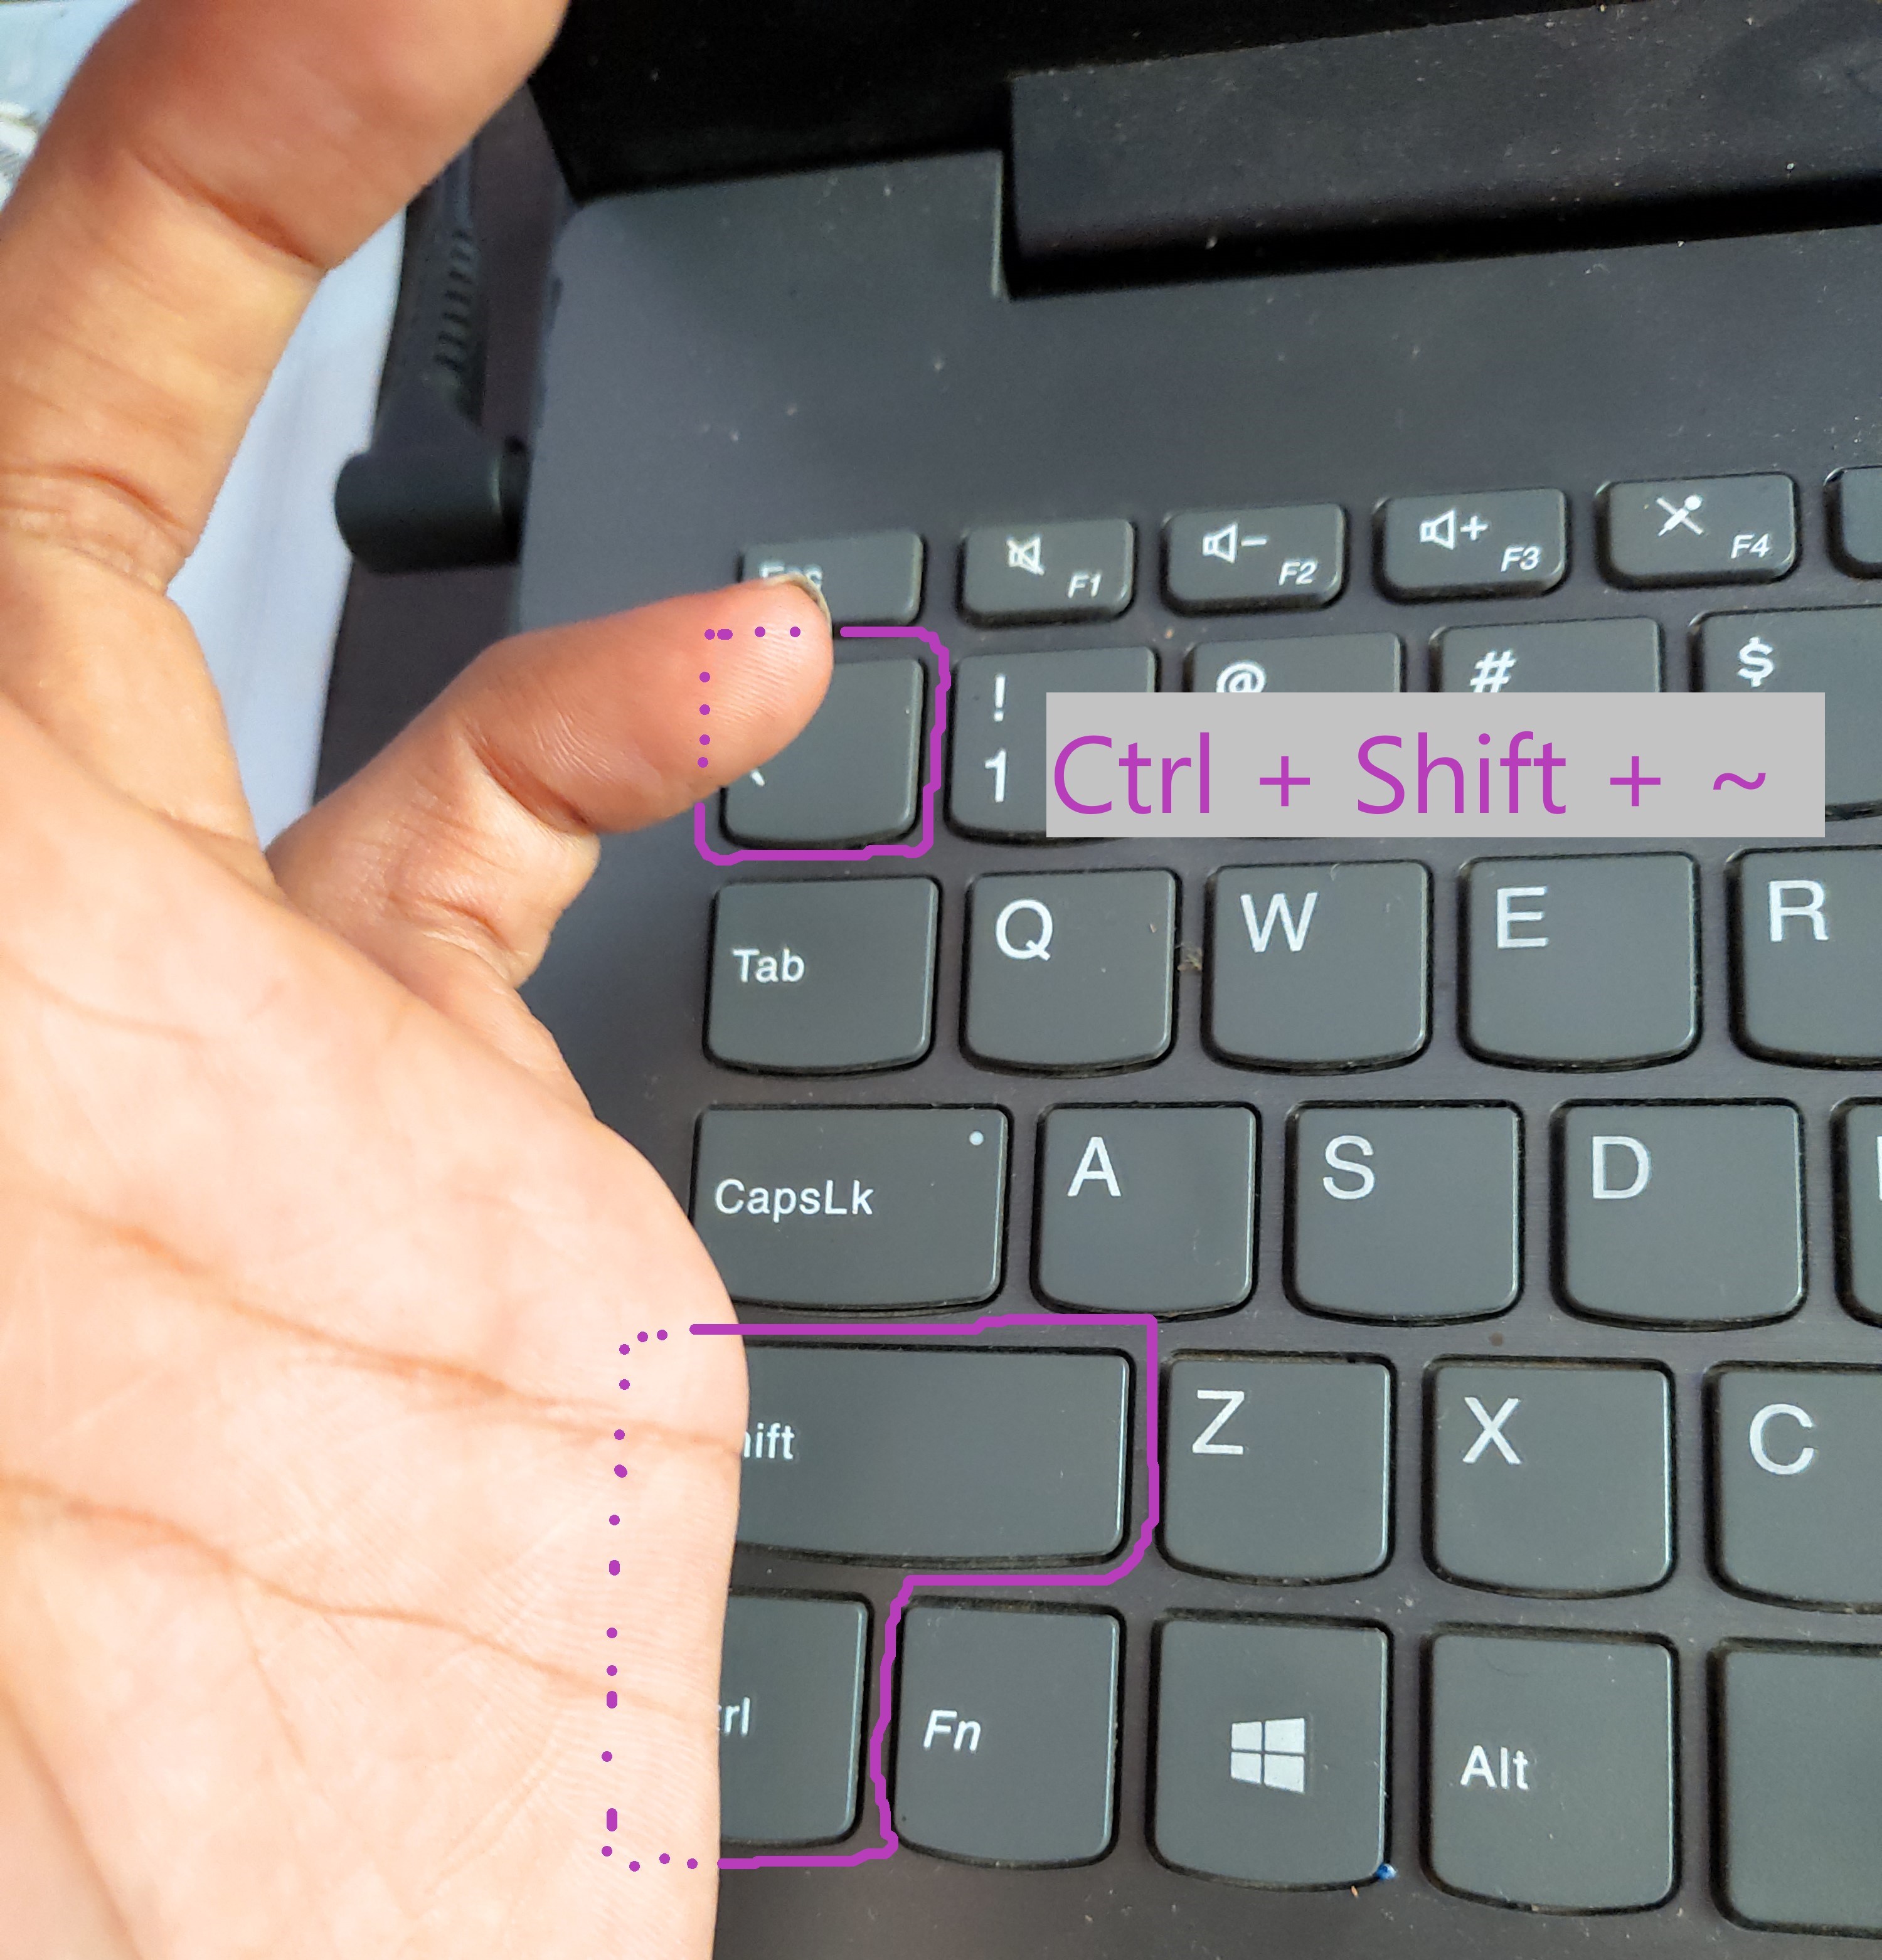 Ctrl, Shift key combination